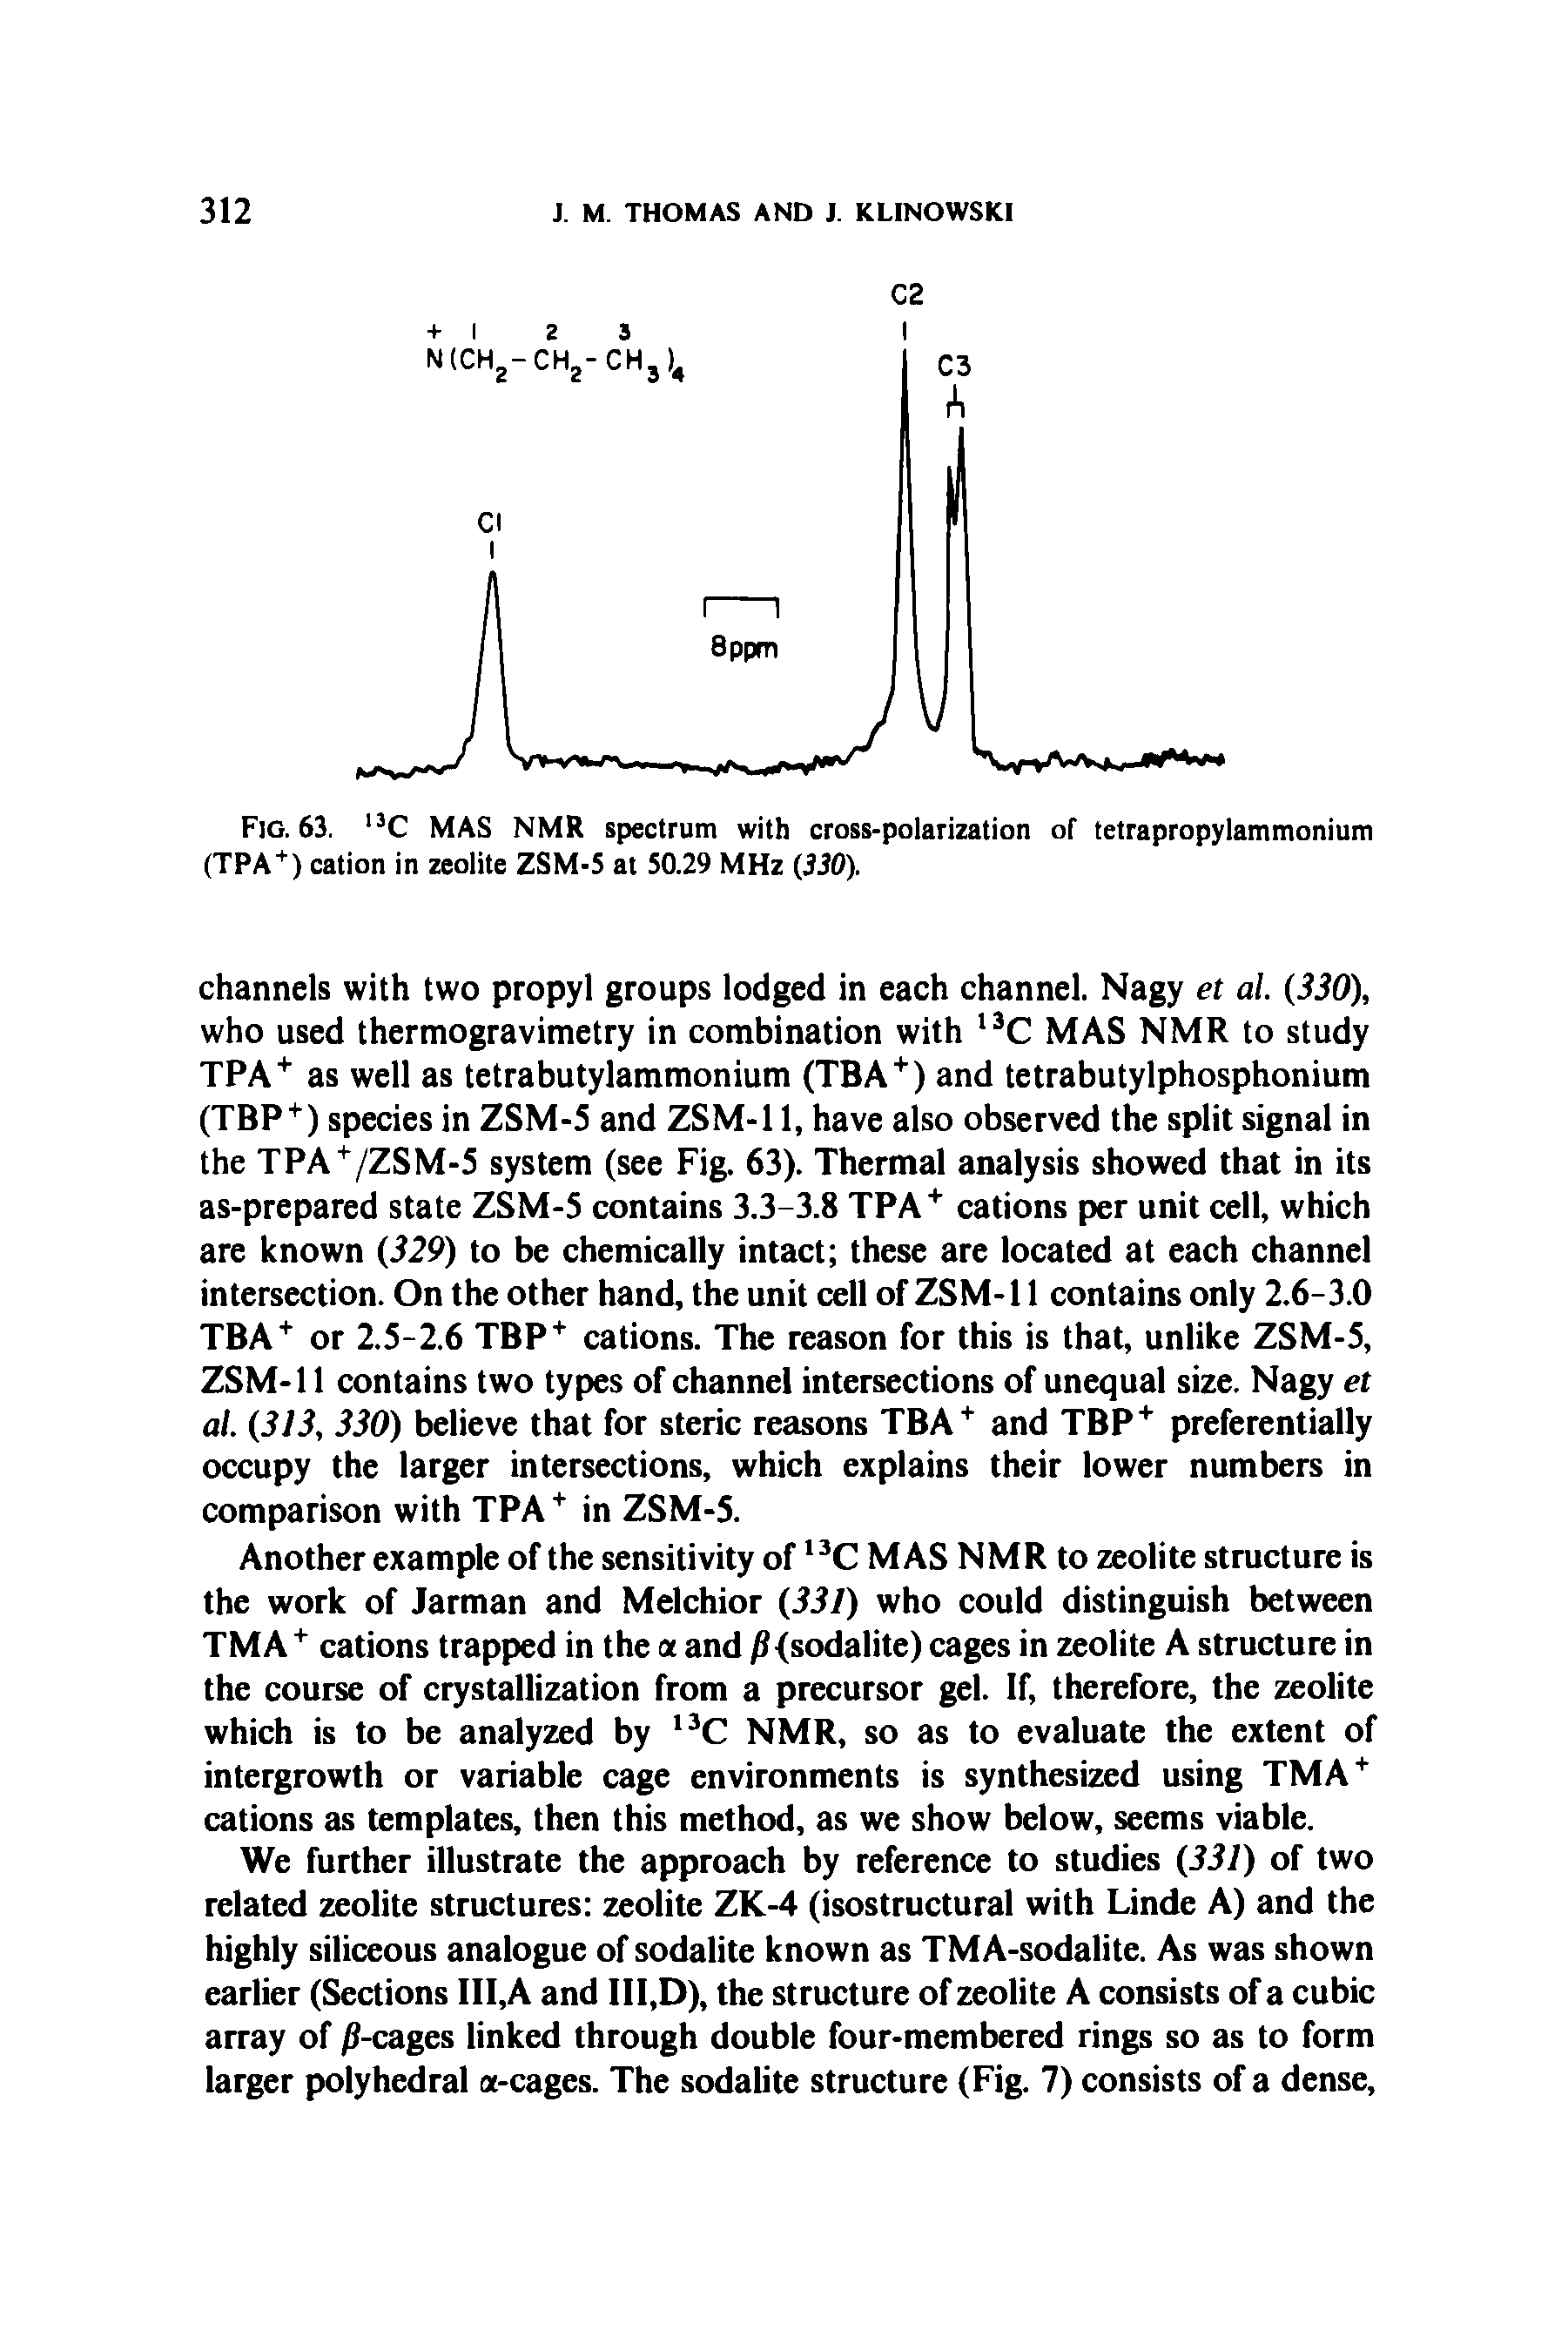 Fig. 63. 13C MAS NMR spectrum with cross-polarization of tetrapropylammonium (TPA+) cation in zeolite ZSM-S at 50.29 MHz (330).